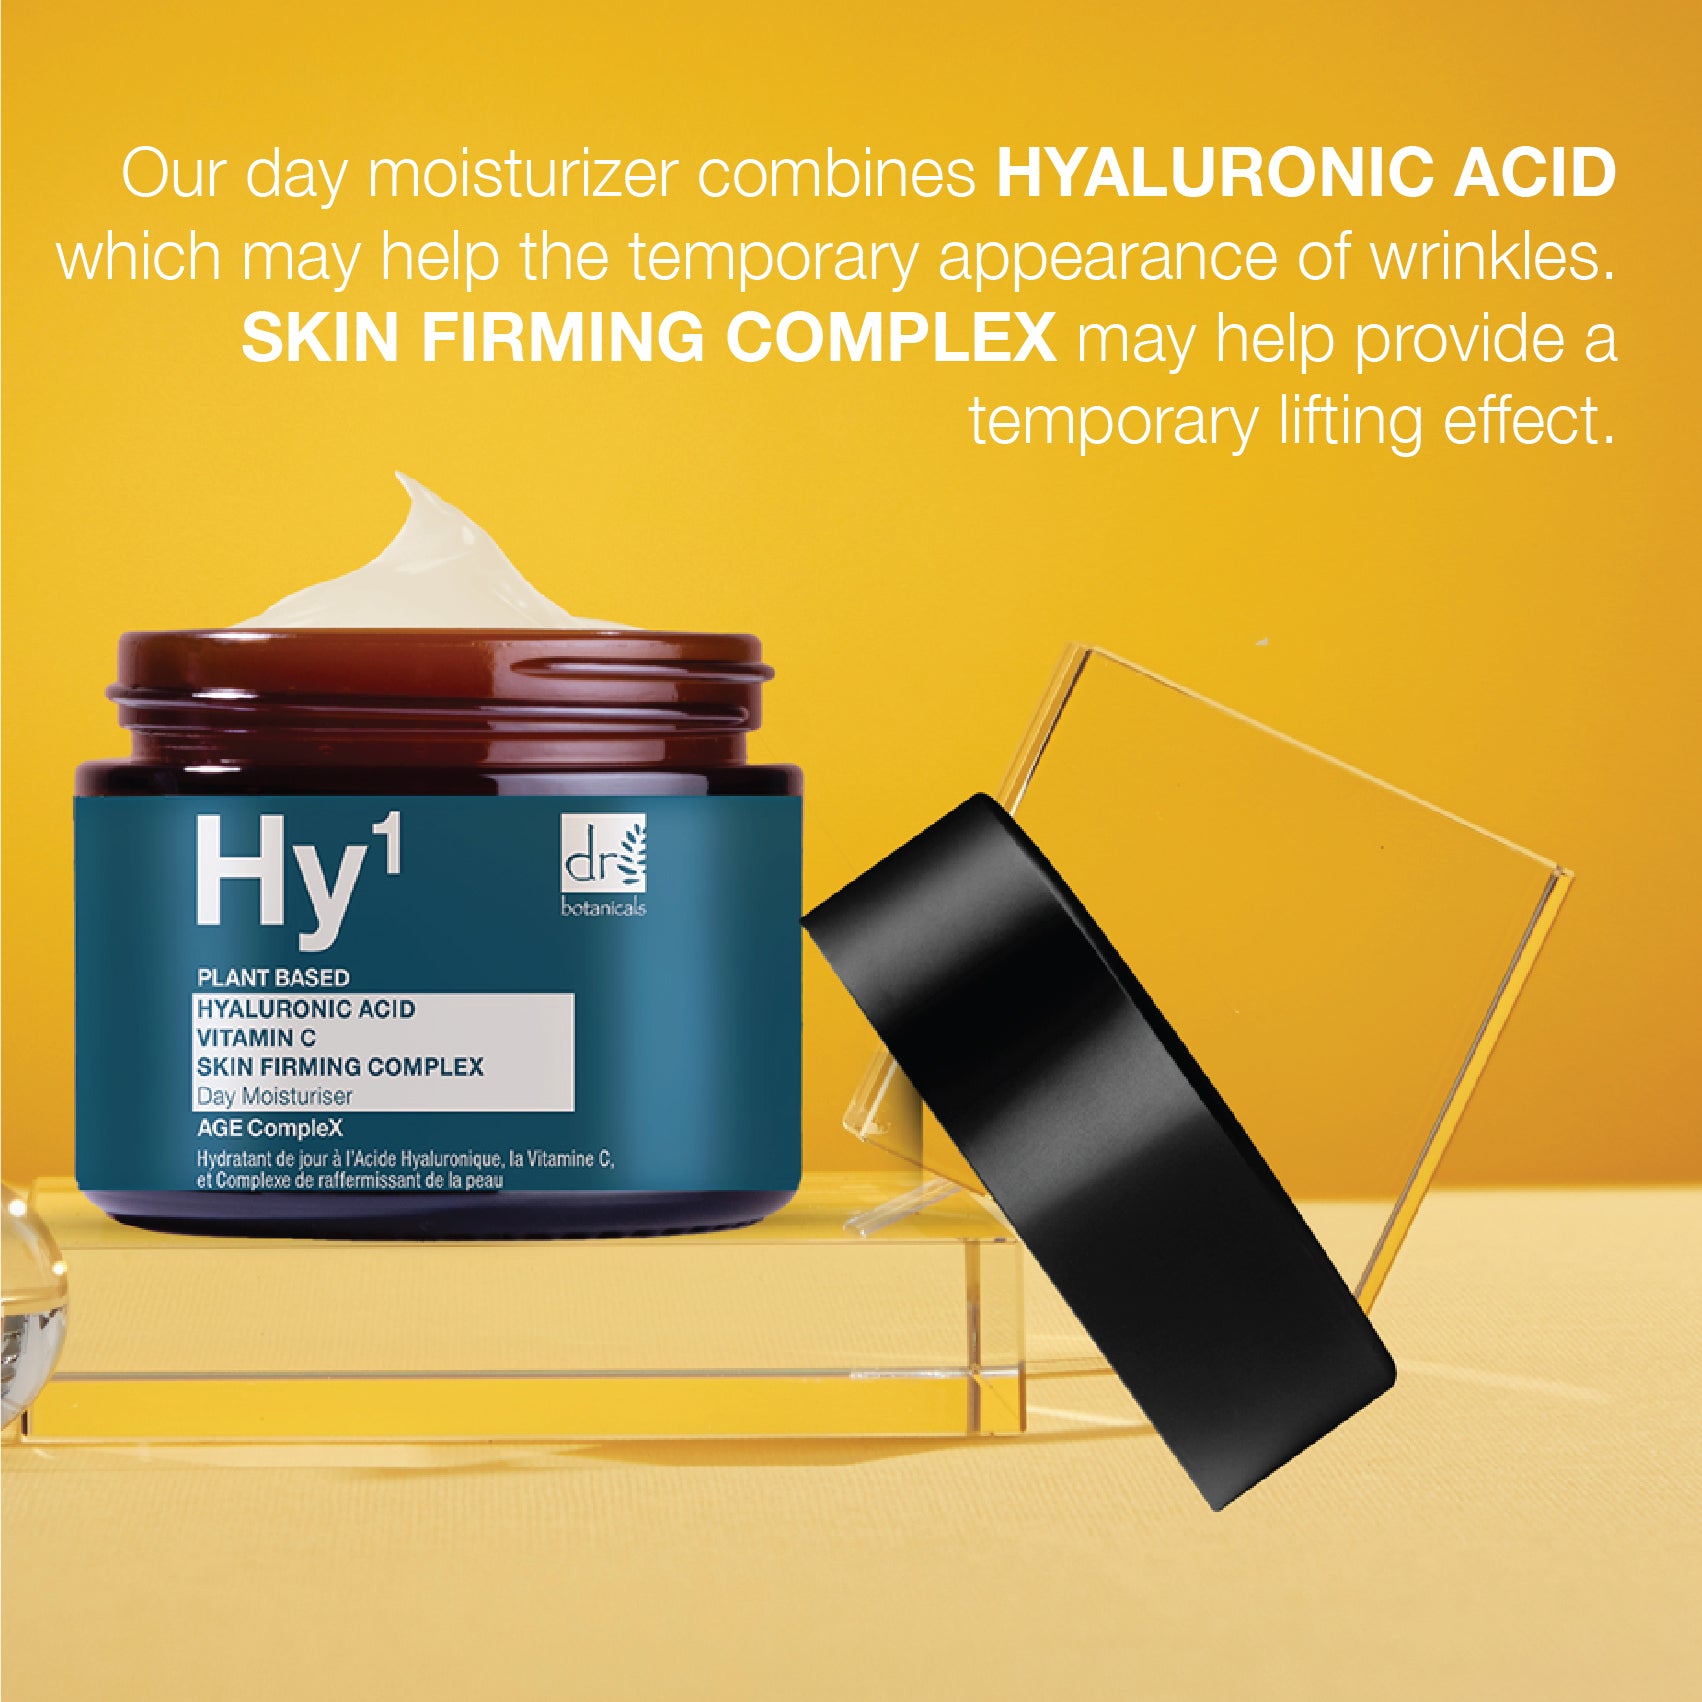 Hyaluronic Acid 1% & Vitamin C 1% & Skin Firming Complex 1% Day Moisturiser 60ml